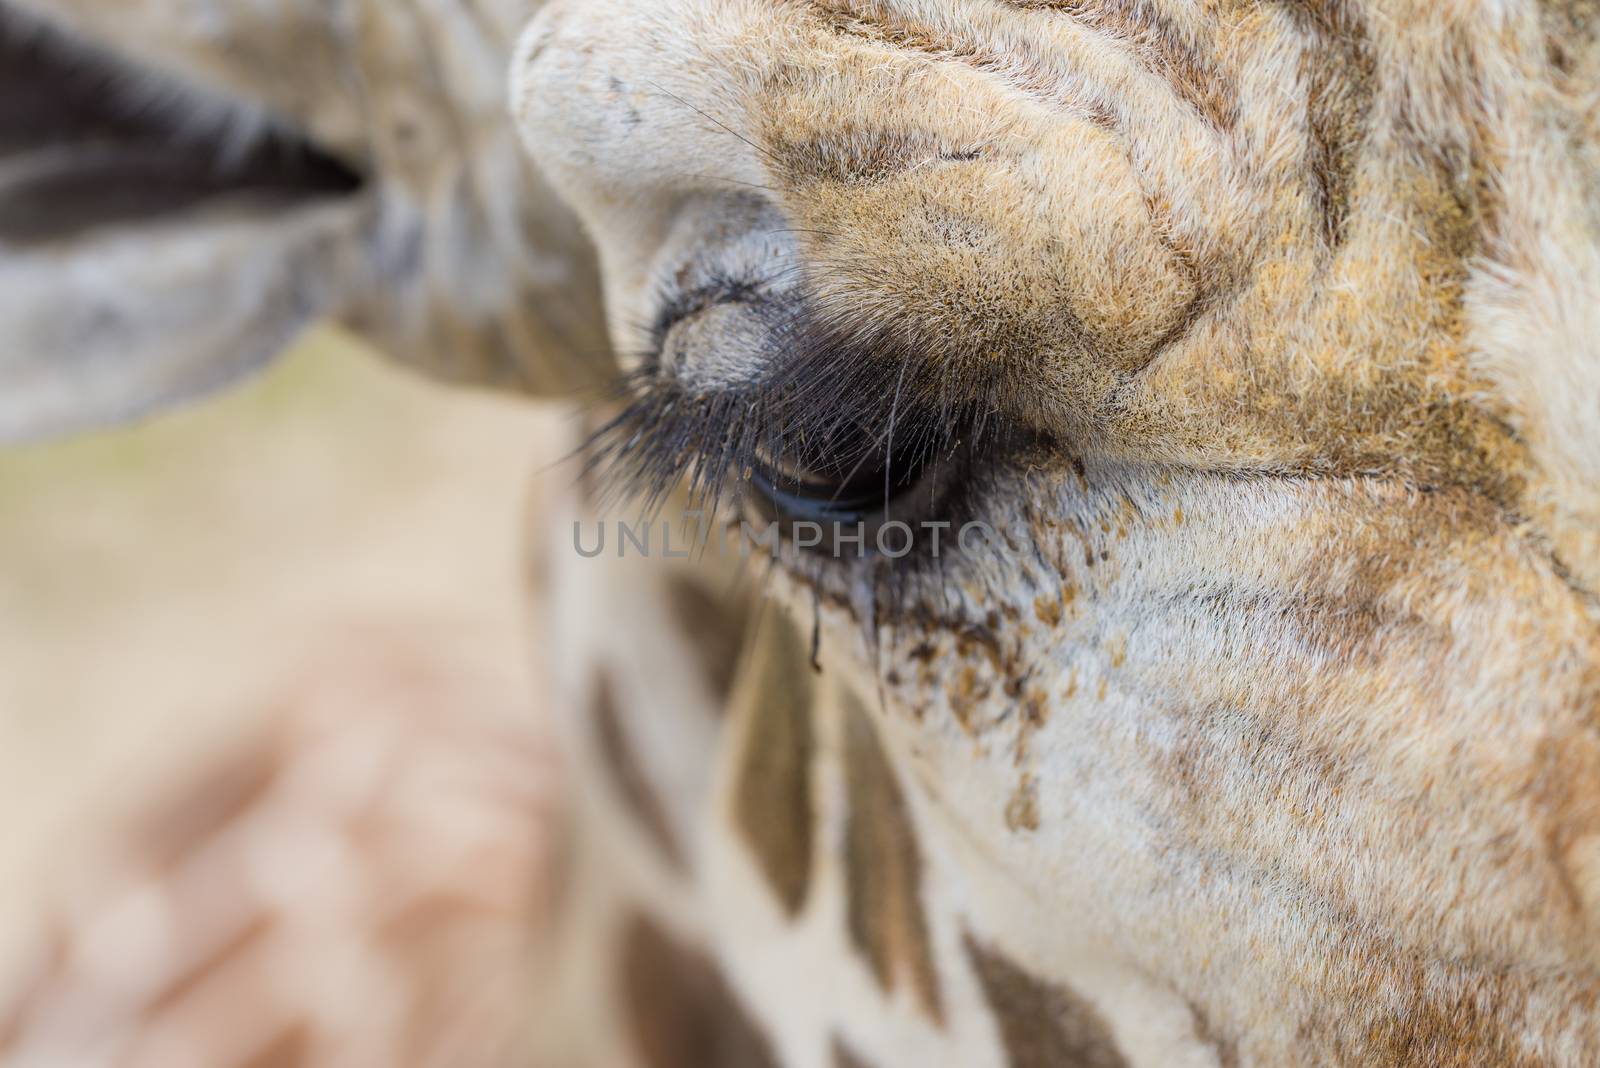 A close up of a giraffe's eye and eyelashes.